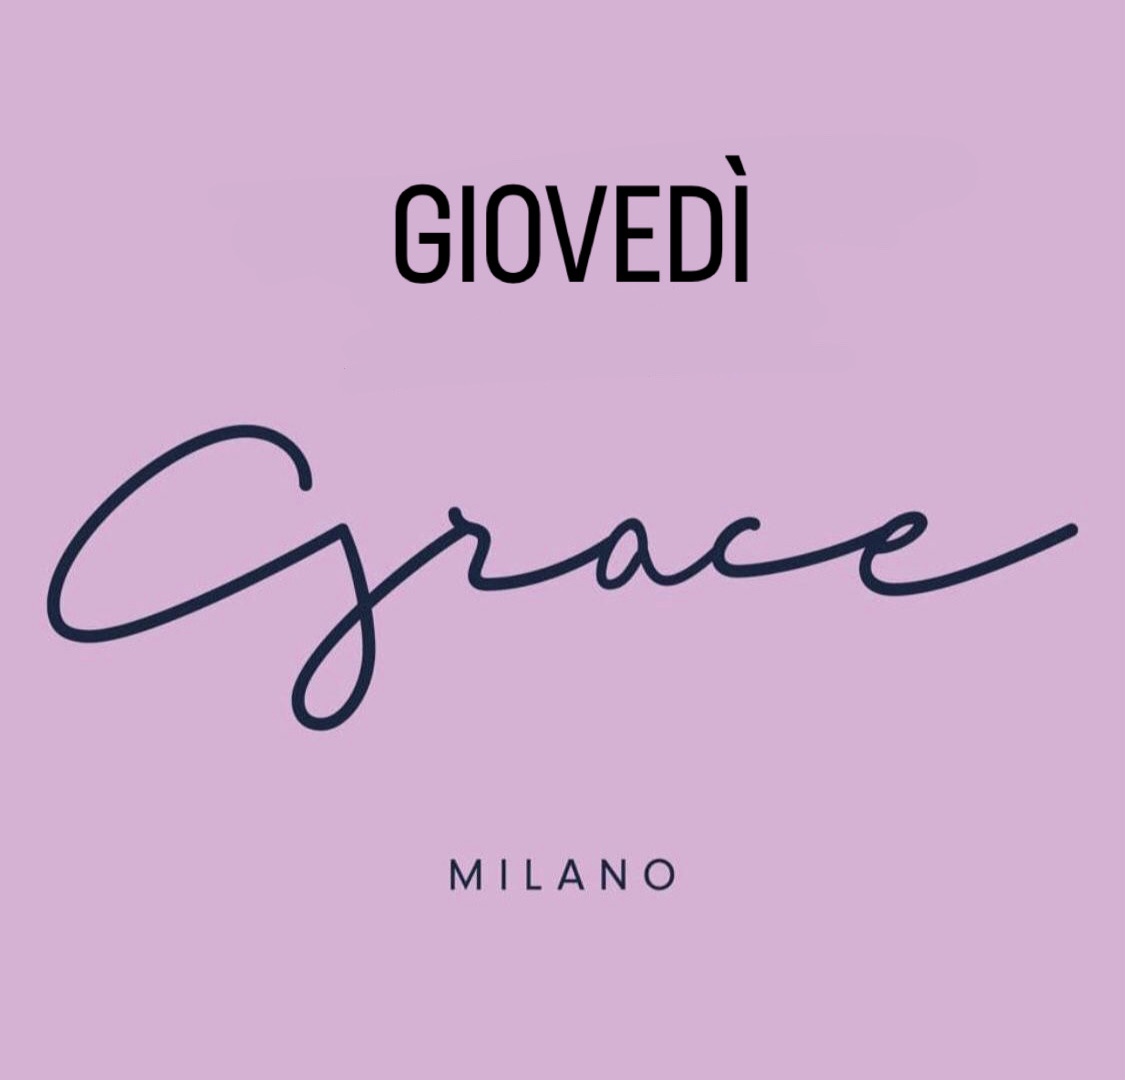 Giovedi Grace Club Milano Info 351-6641431